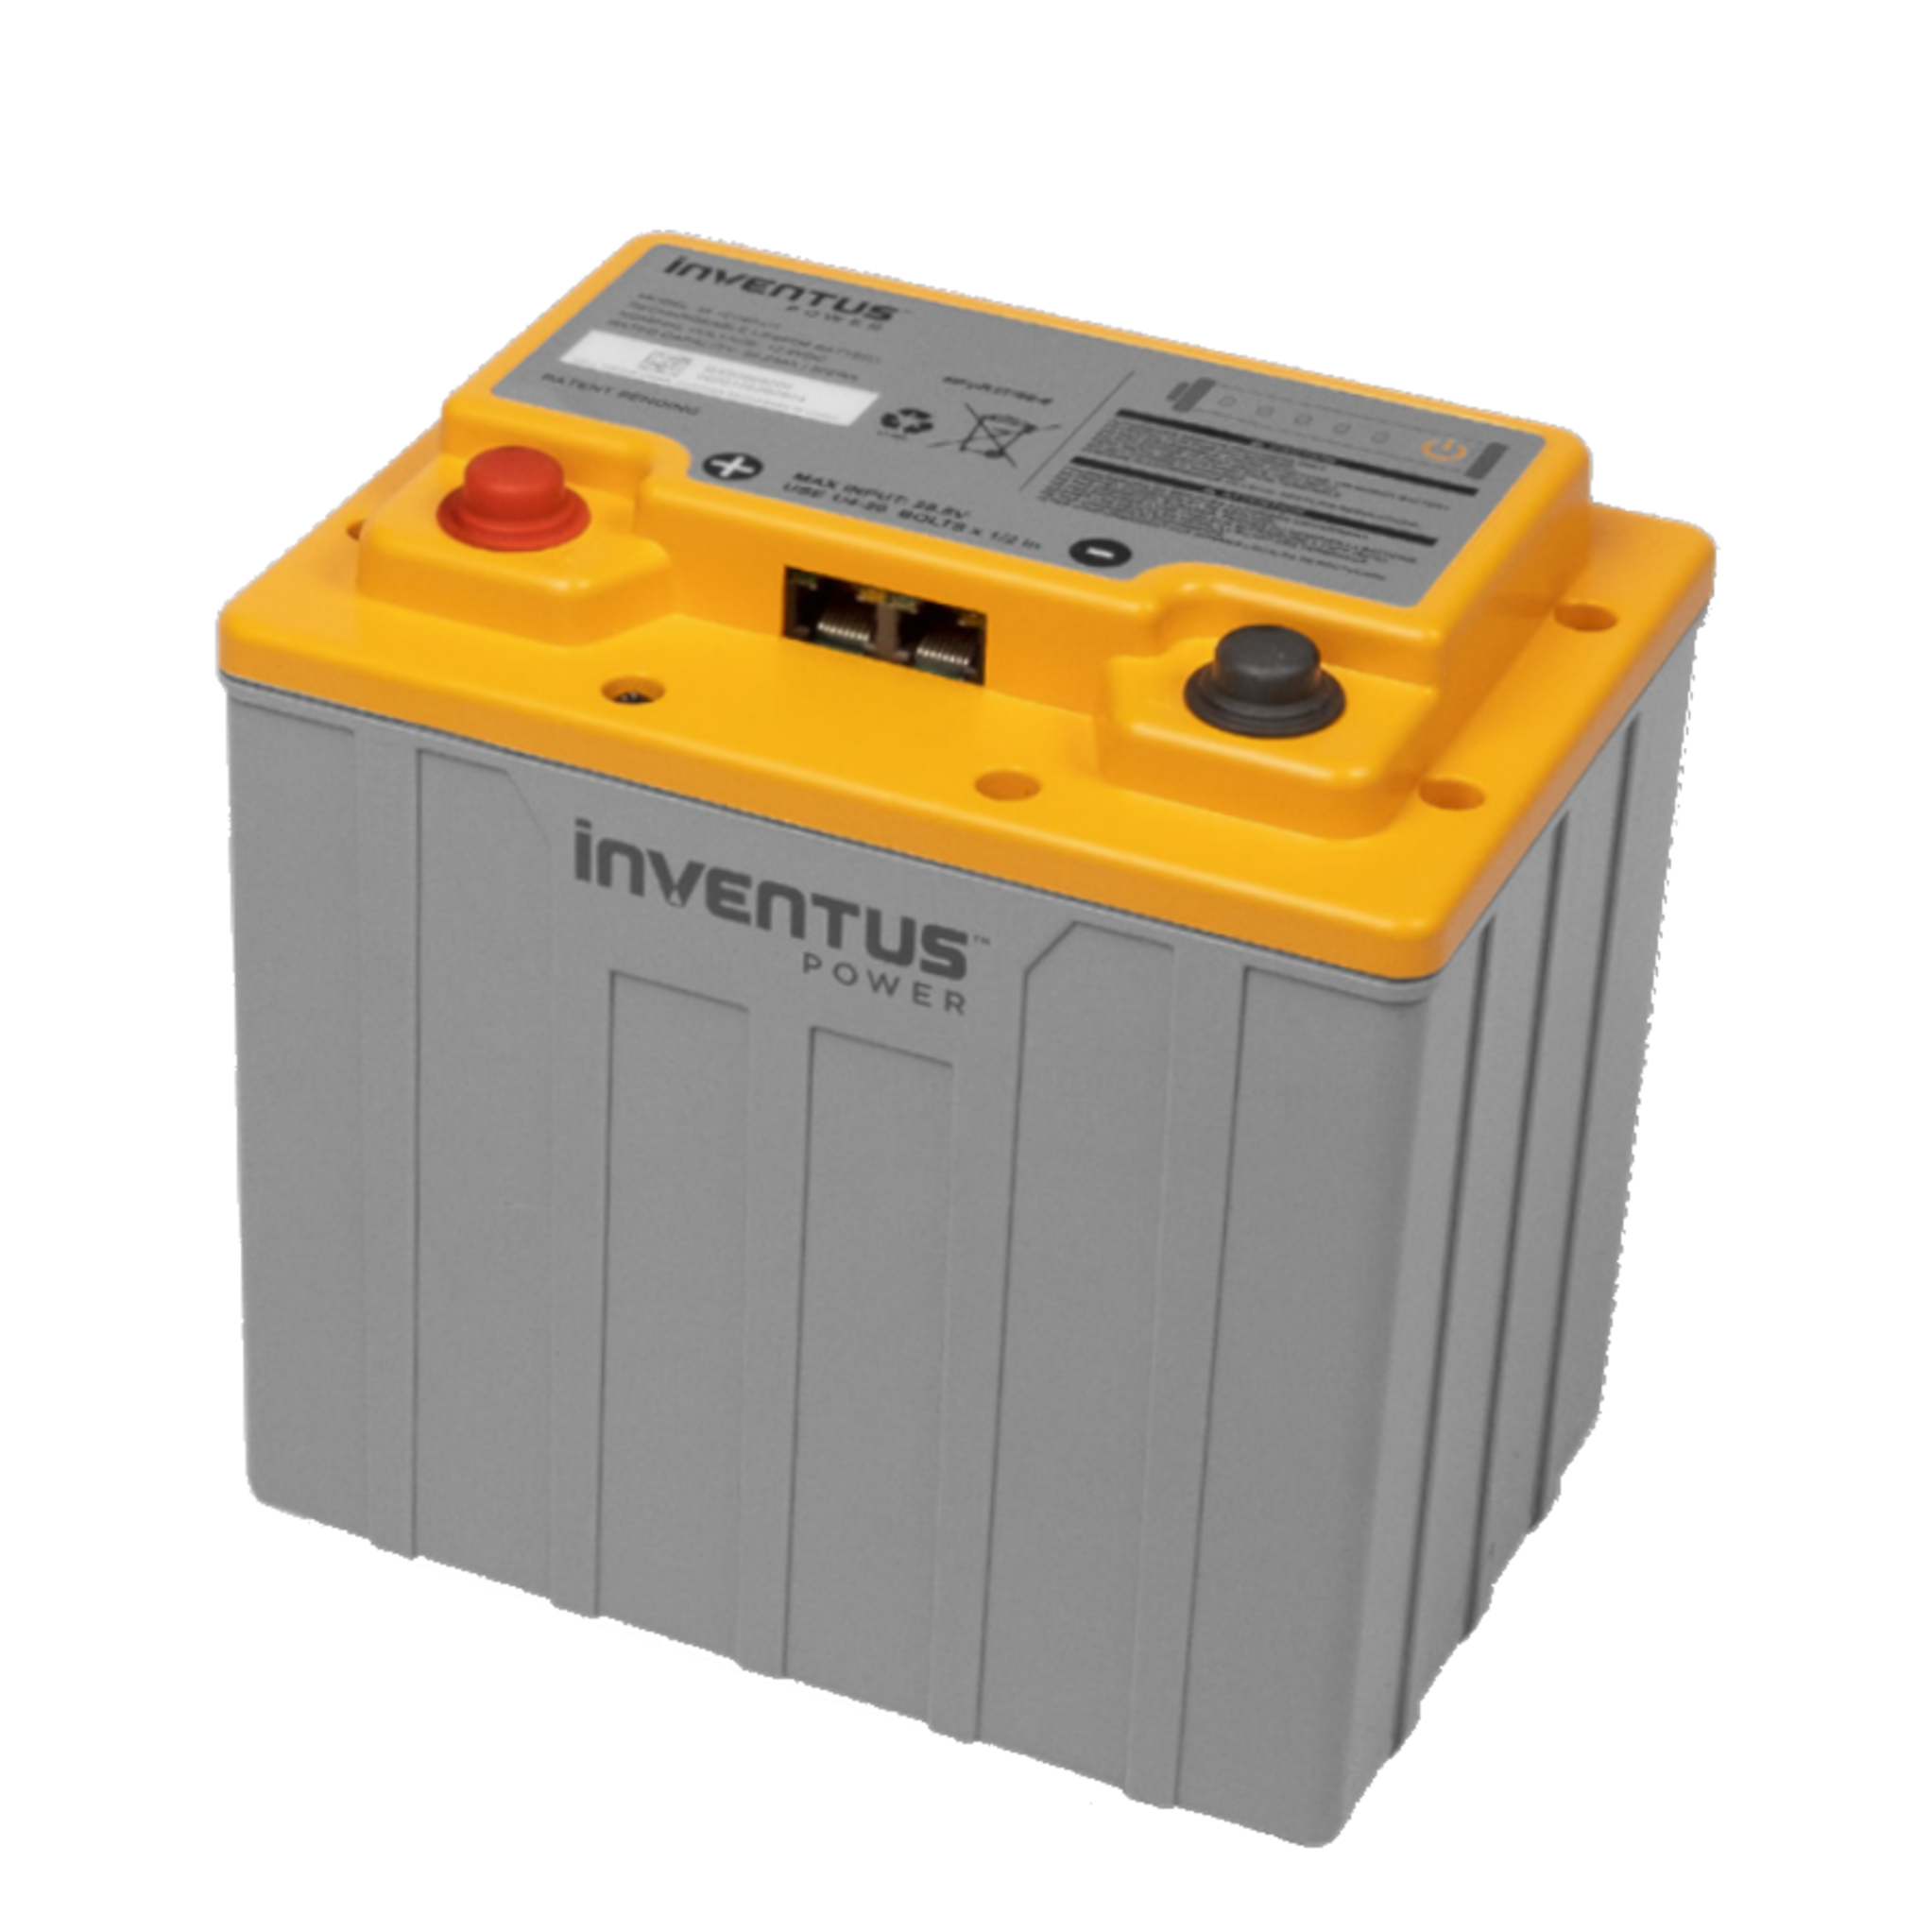 Inventus S-24V20-U1 Lithium Deep Cycle 24V Battery